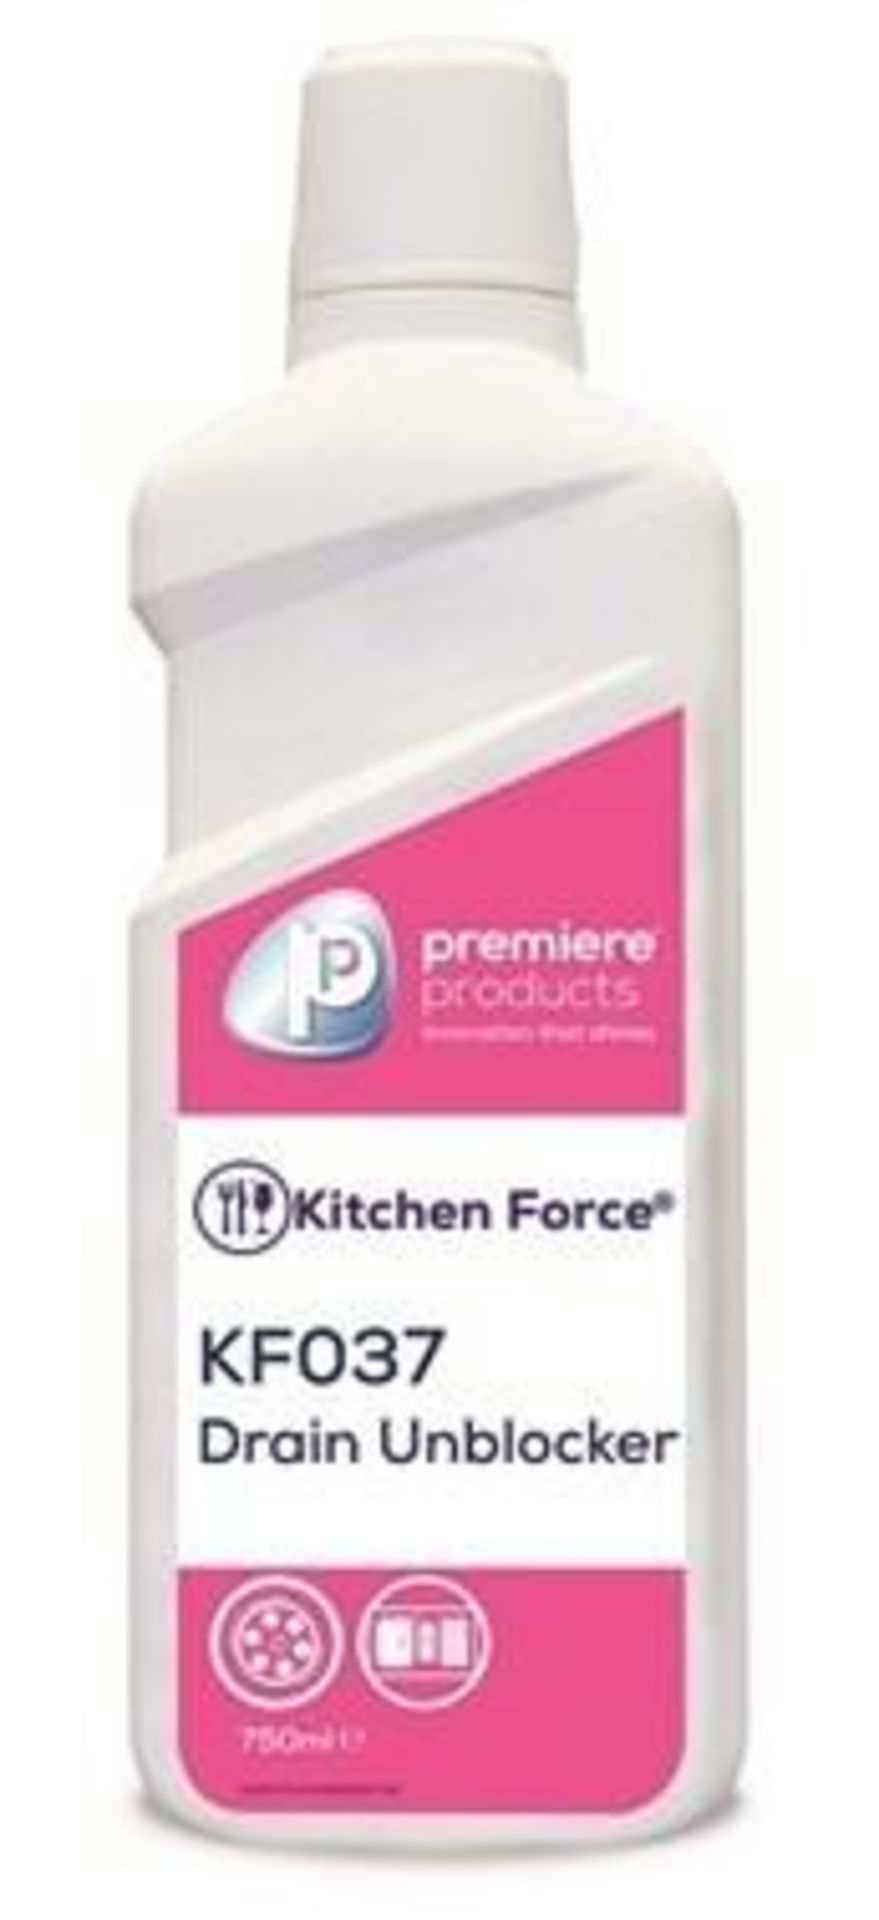 48 x Kitchen Force 750ml Drain Unblocker - Premiere Products - Powerful Alkaline Drain Cleaner -